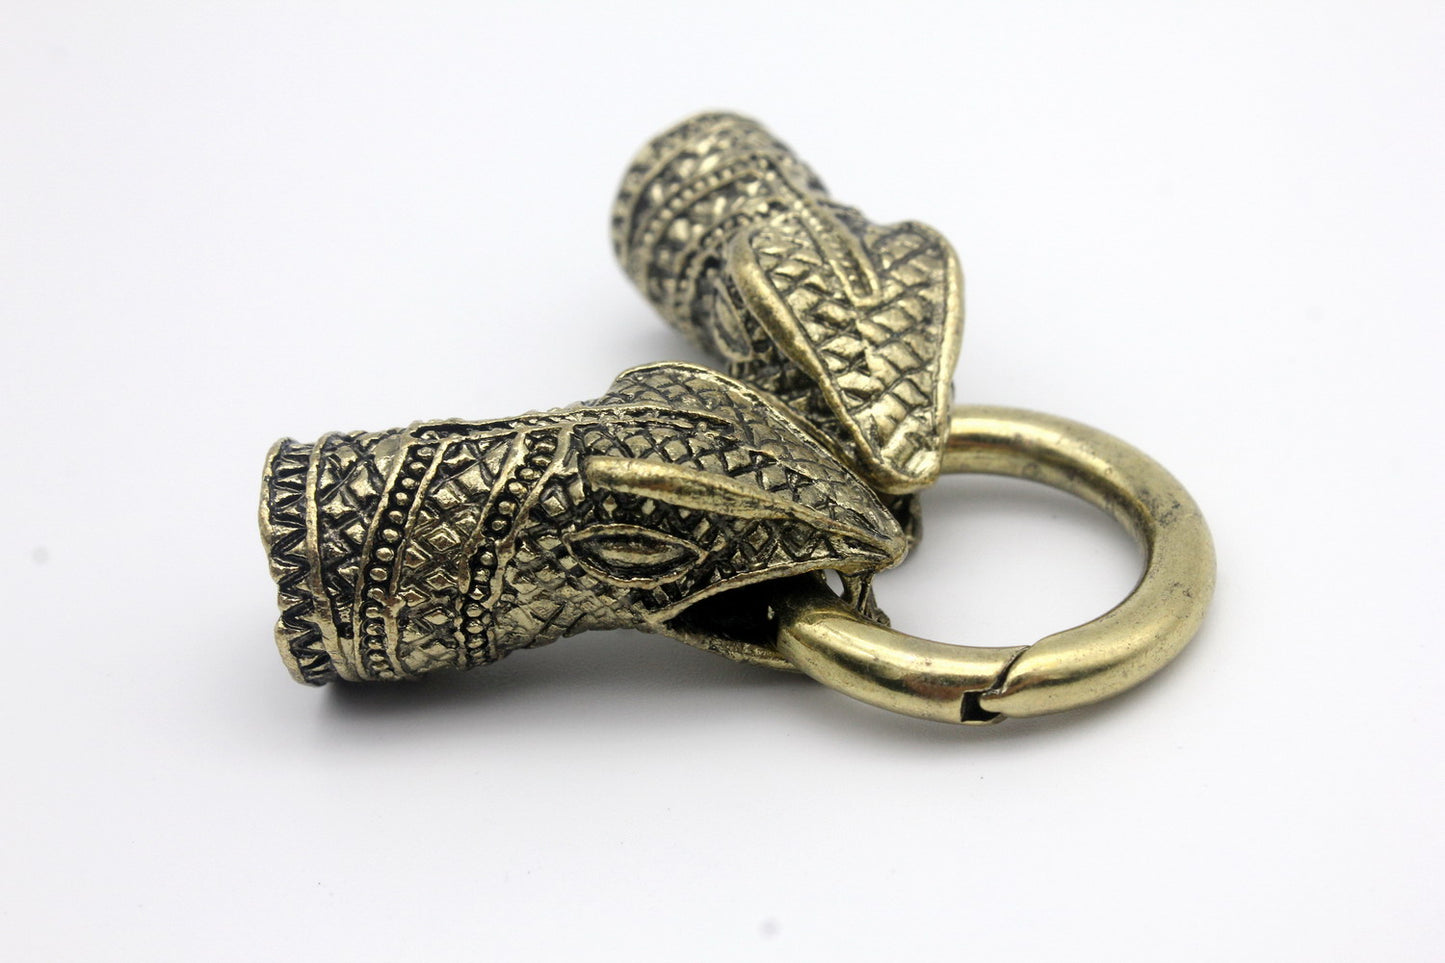 snake bracelet clasps closure charm hook 10mm round hole antique bronze